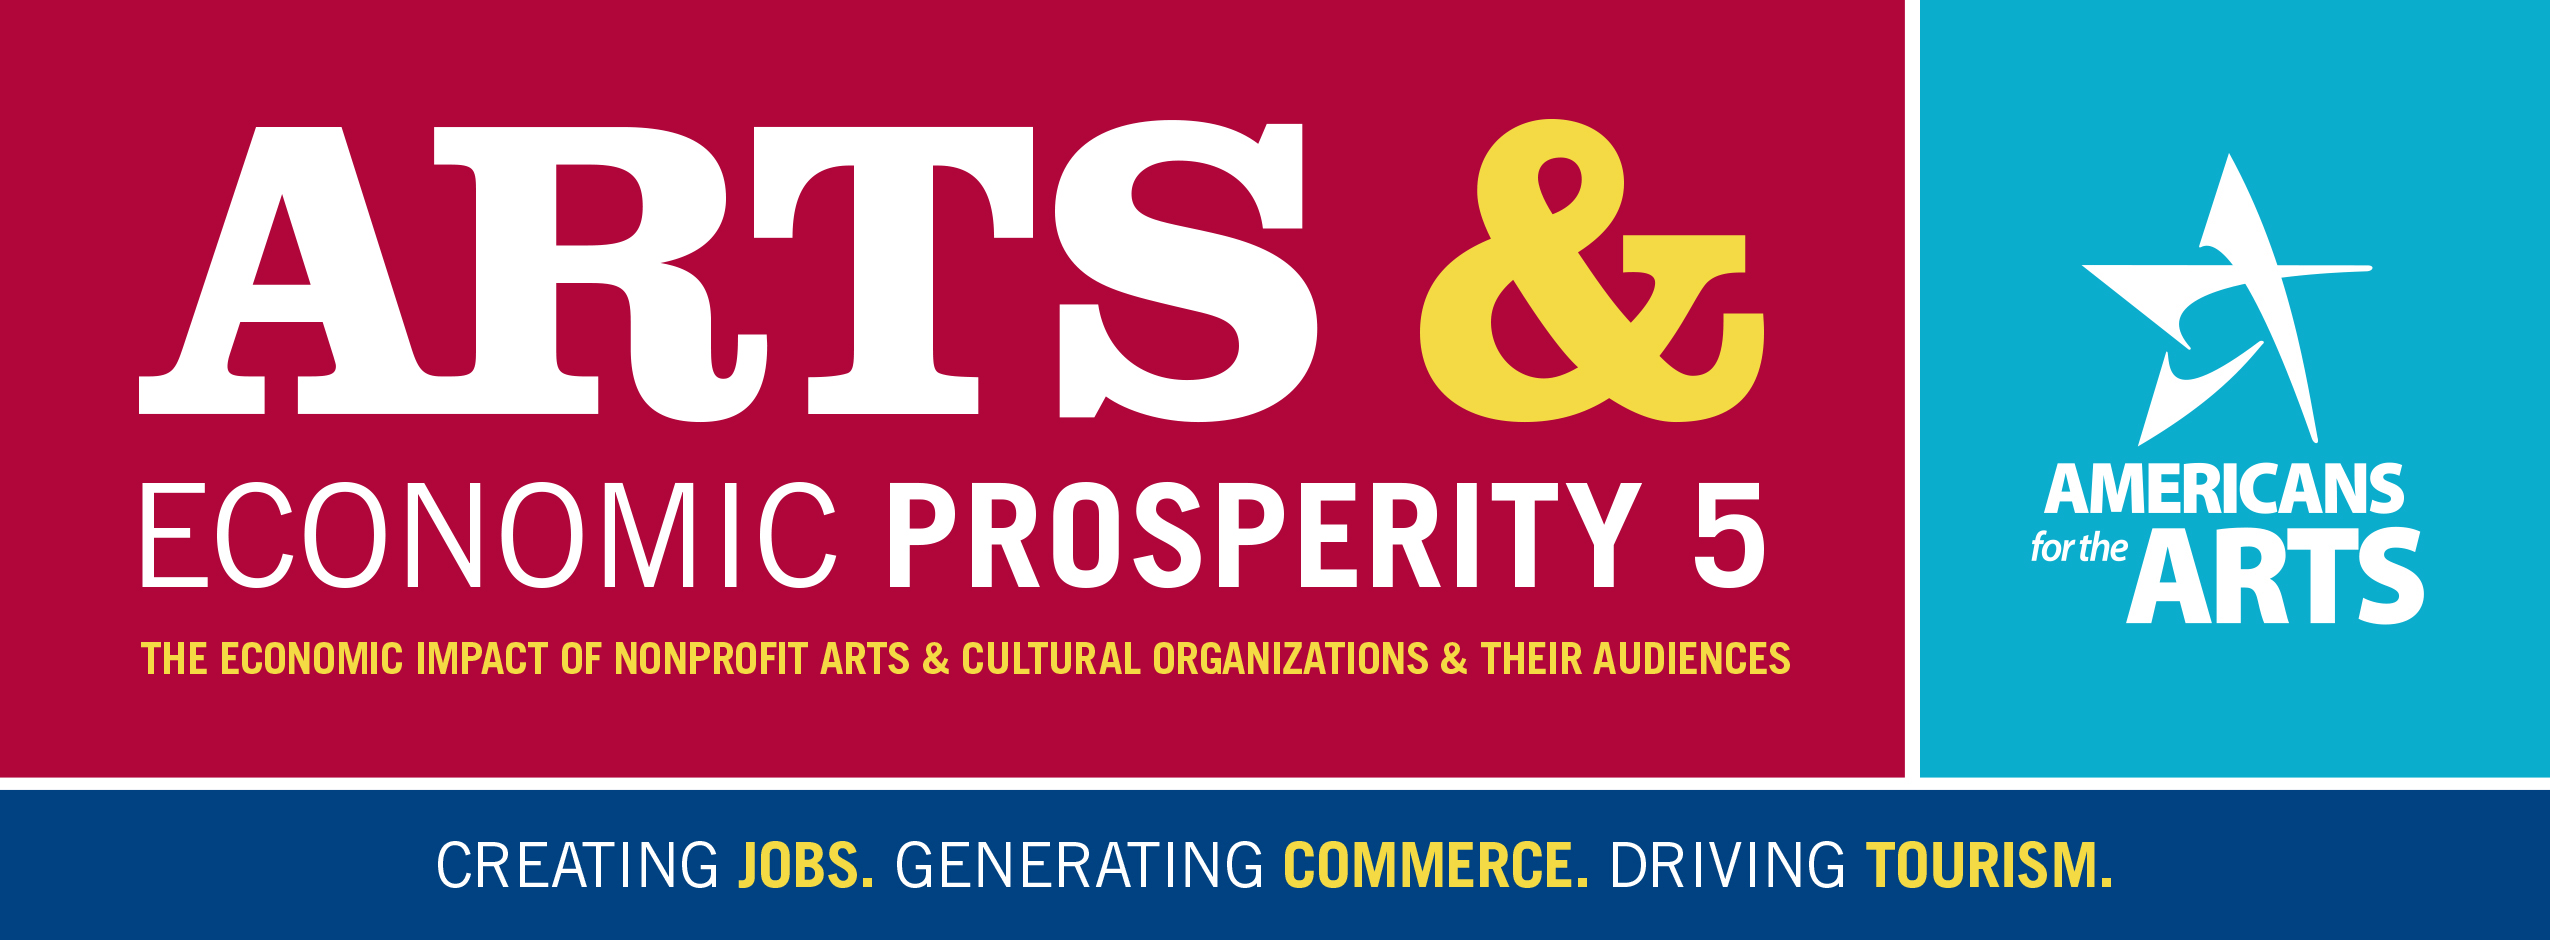 Arts & Economic Prosperity 5: The Economic Impact of Nonprofit Arts & Culture Organizations & Their Audiences